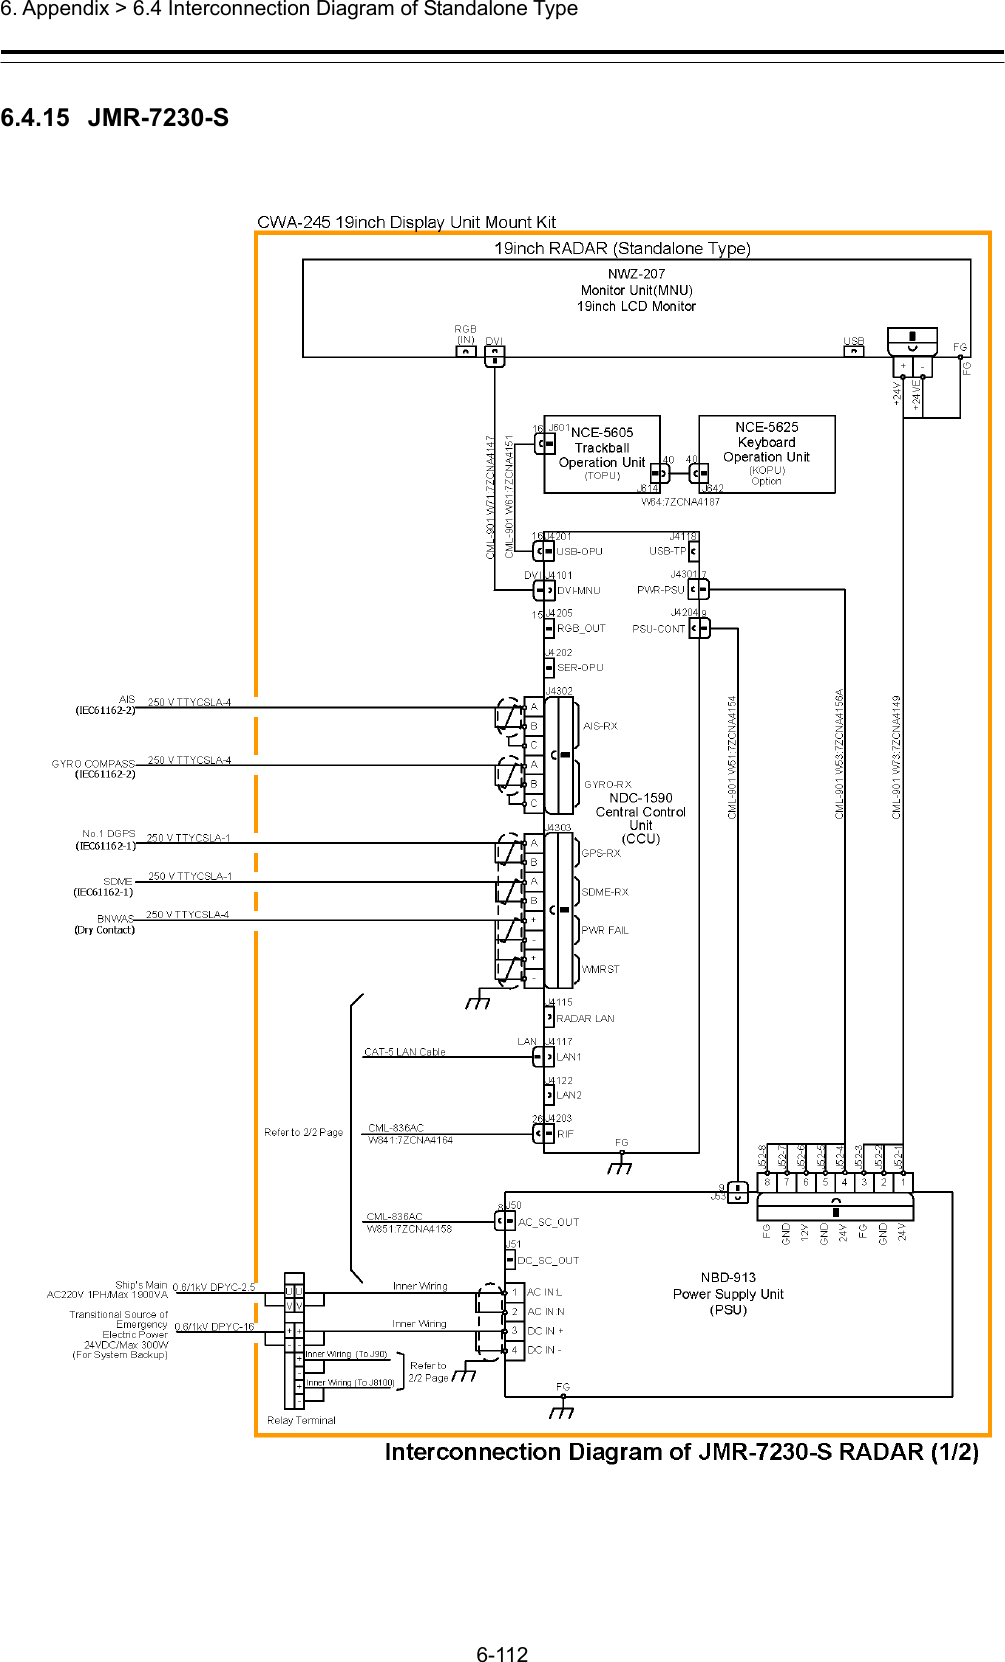  6. Appendix &gt; 6.4 Interconnection Diagram of Standalone Type 6-112  6.4.15  JMR-7230-S 